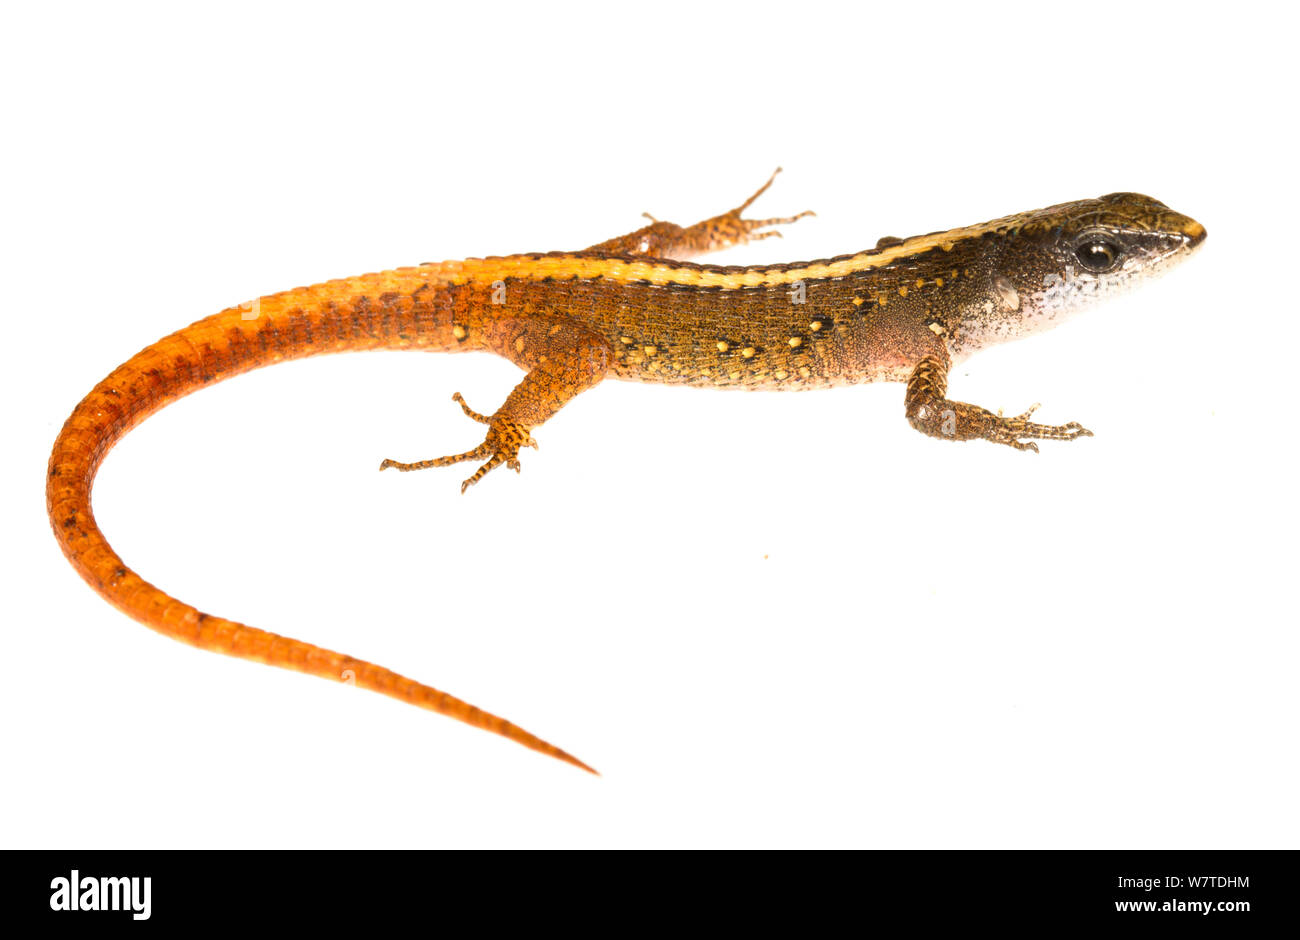 Spectacled lizards (Arthrosaura kockii) Matoury, French Guiana. Meetyourneighbours.net project Stock Photo